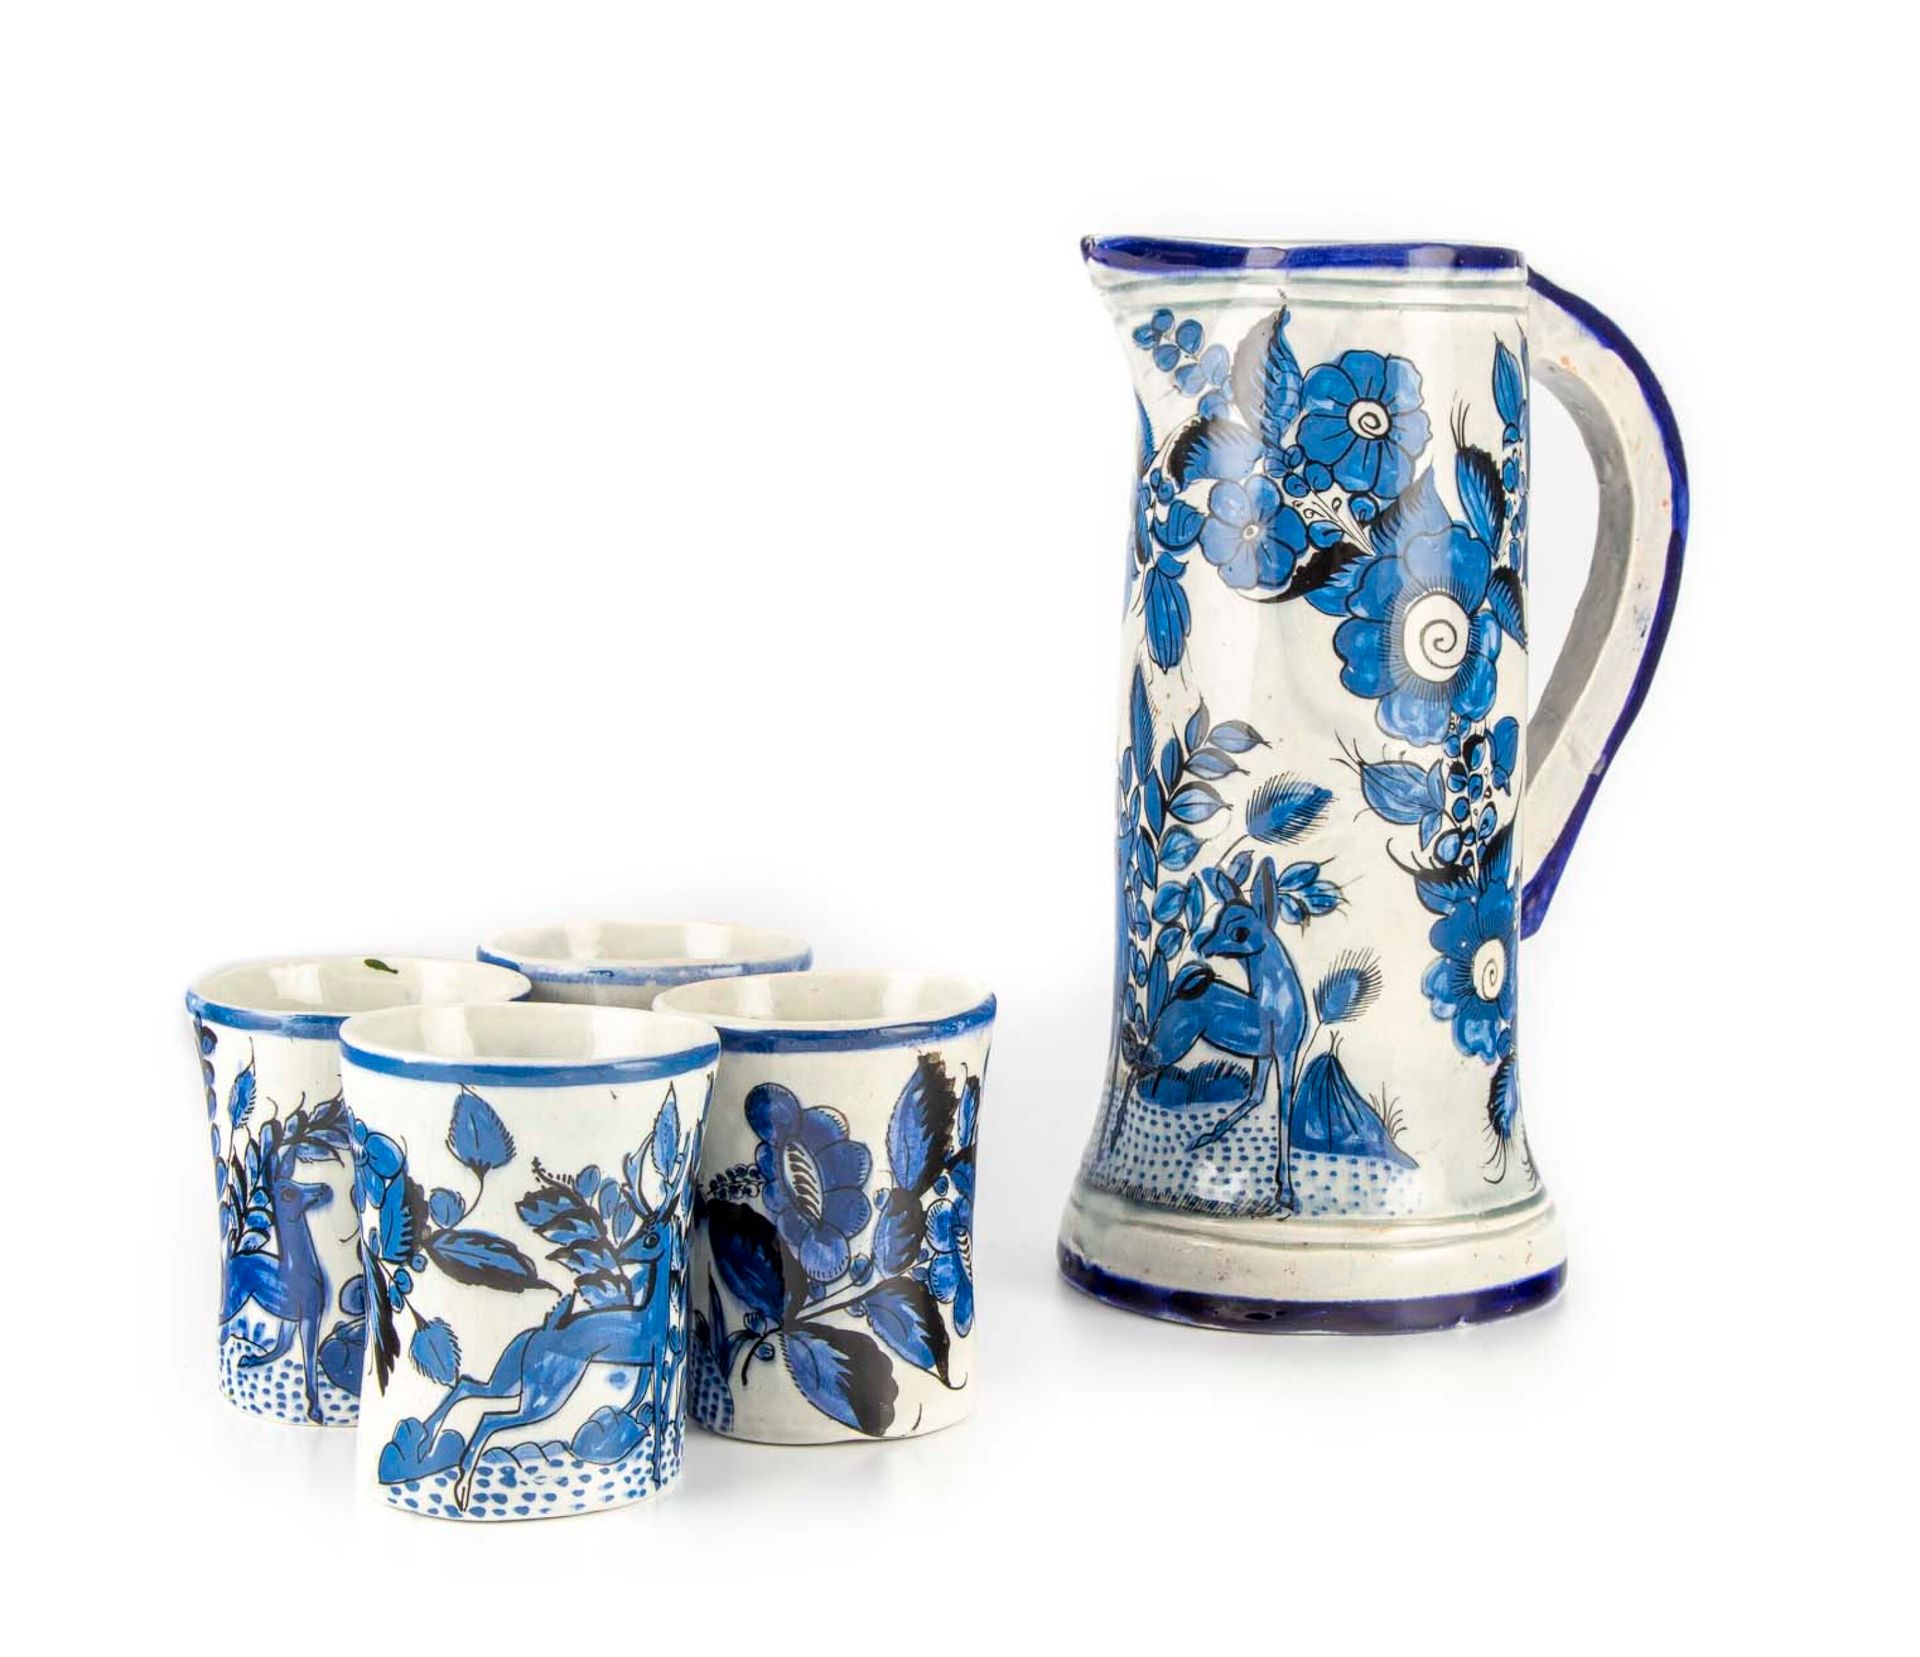 Null 波斯风格的蓝色单色鹿和花装饰的陶罐和四个高脚杯

20世纪

H.29.5厘米和10厘米